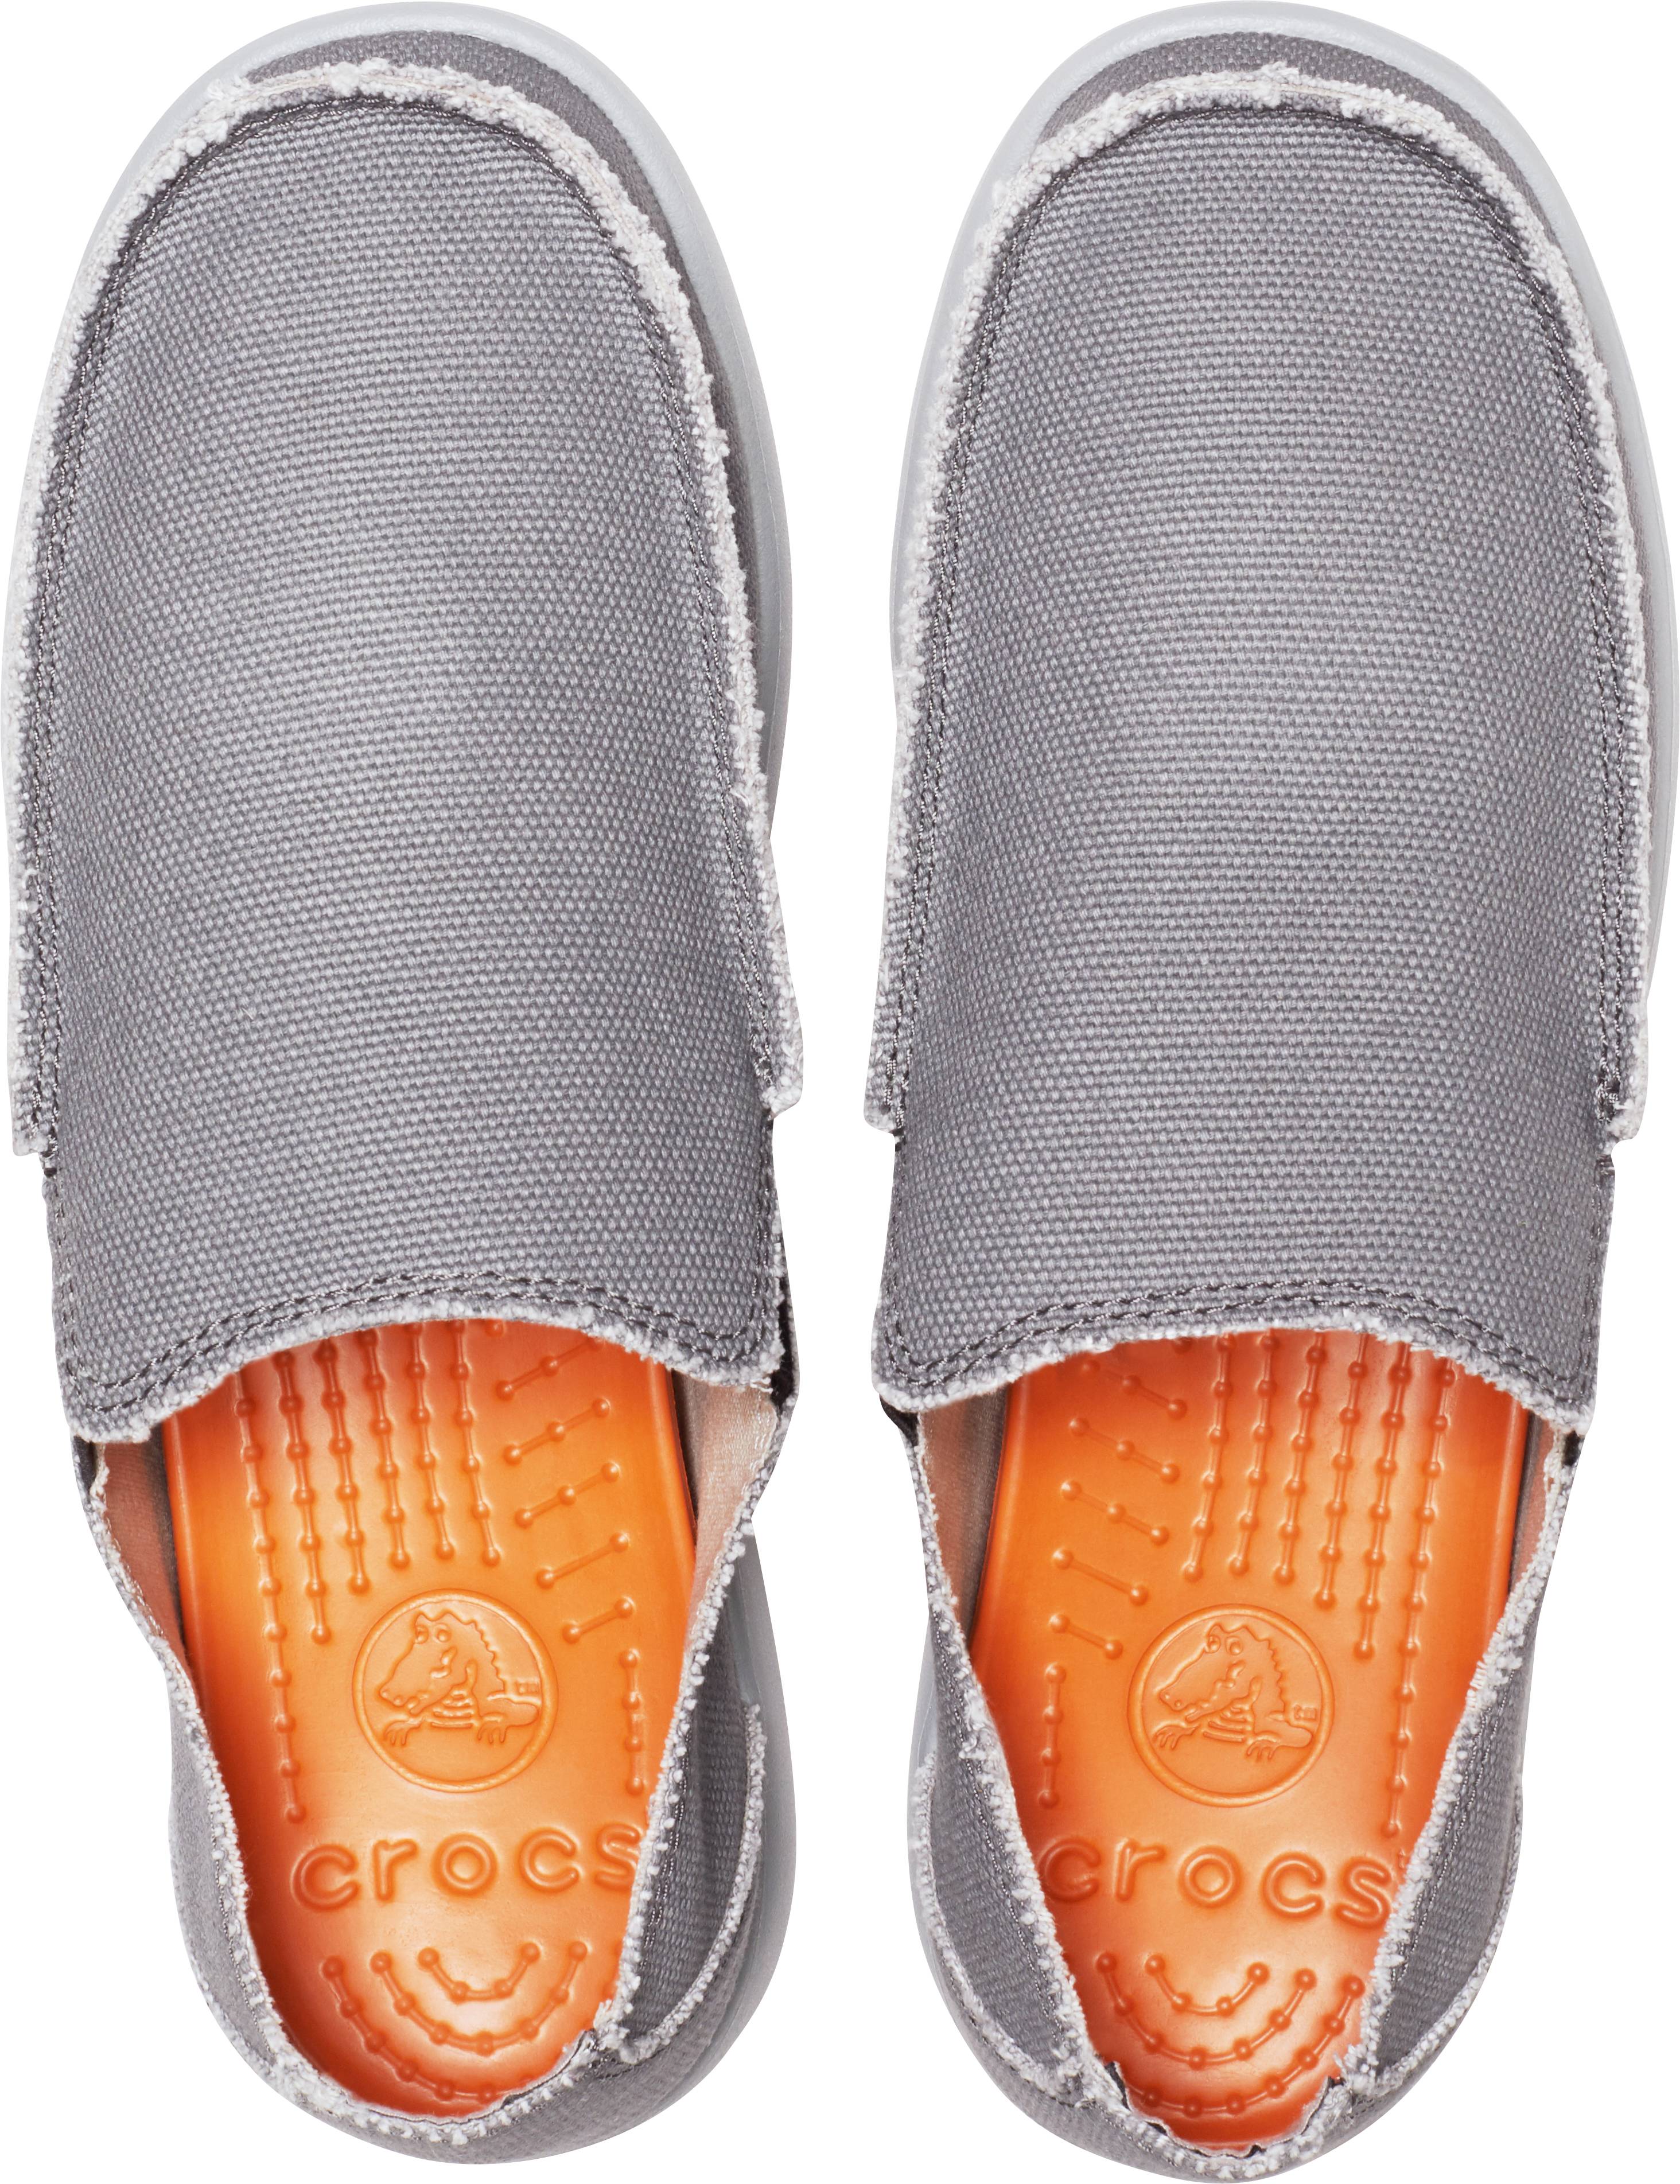 Crocs Men's Santa Cruz Slip on Loafers - image 3 of 6